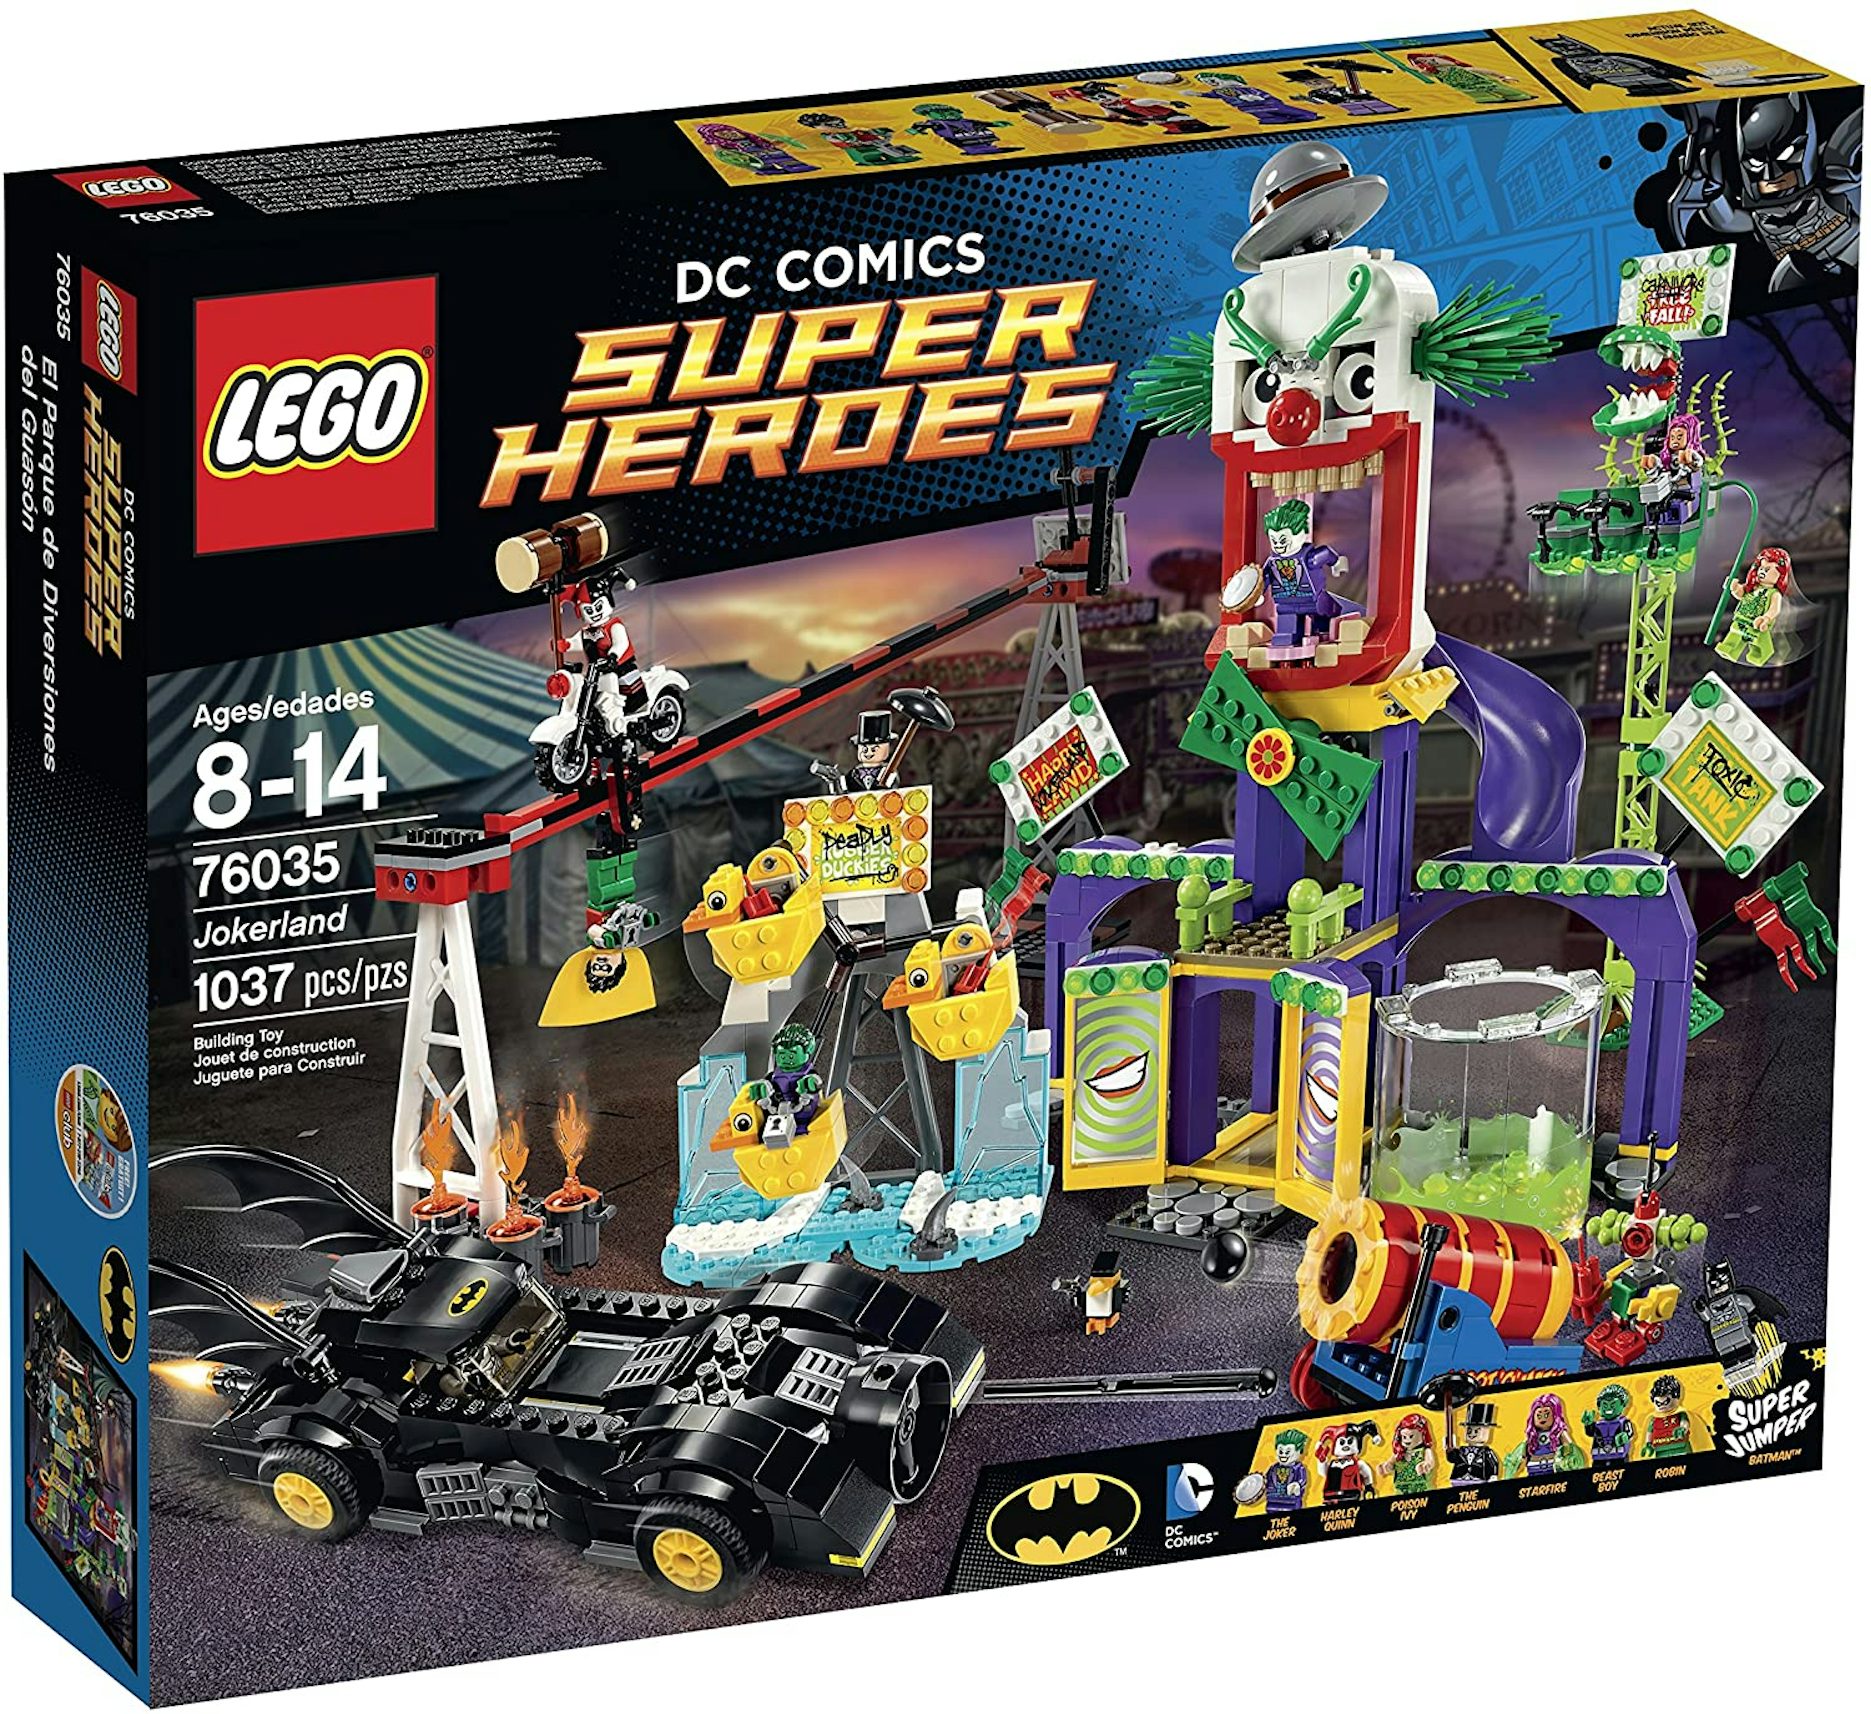 LEGO DC Comics Super Heroes Jokerland Set 76035